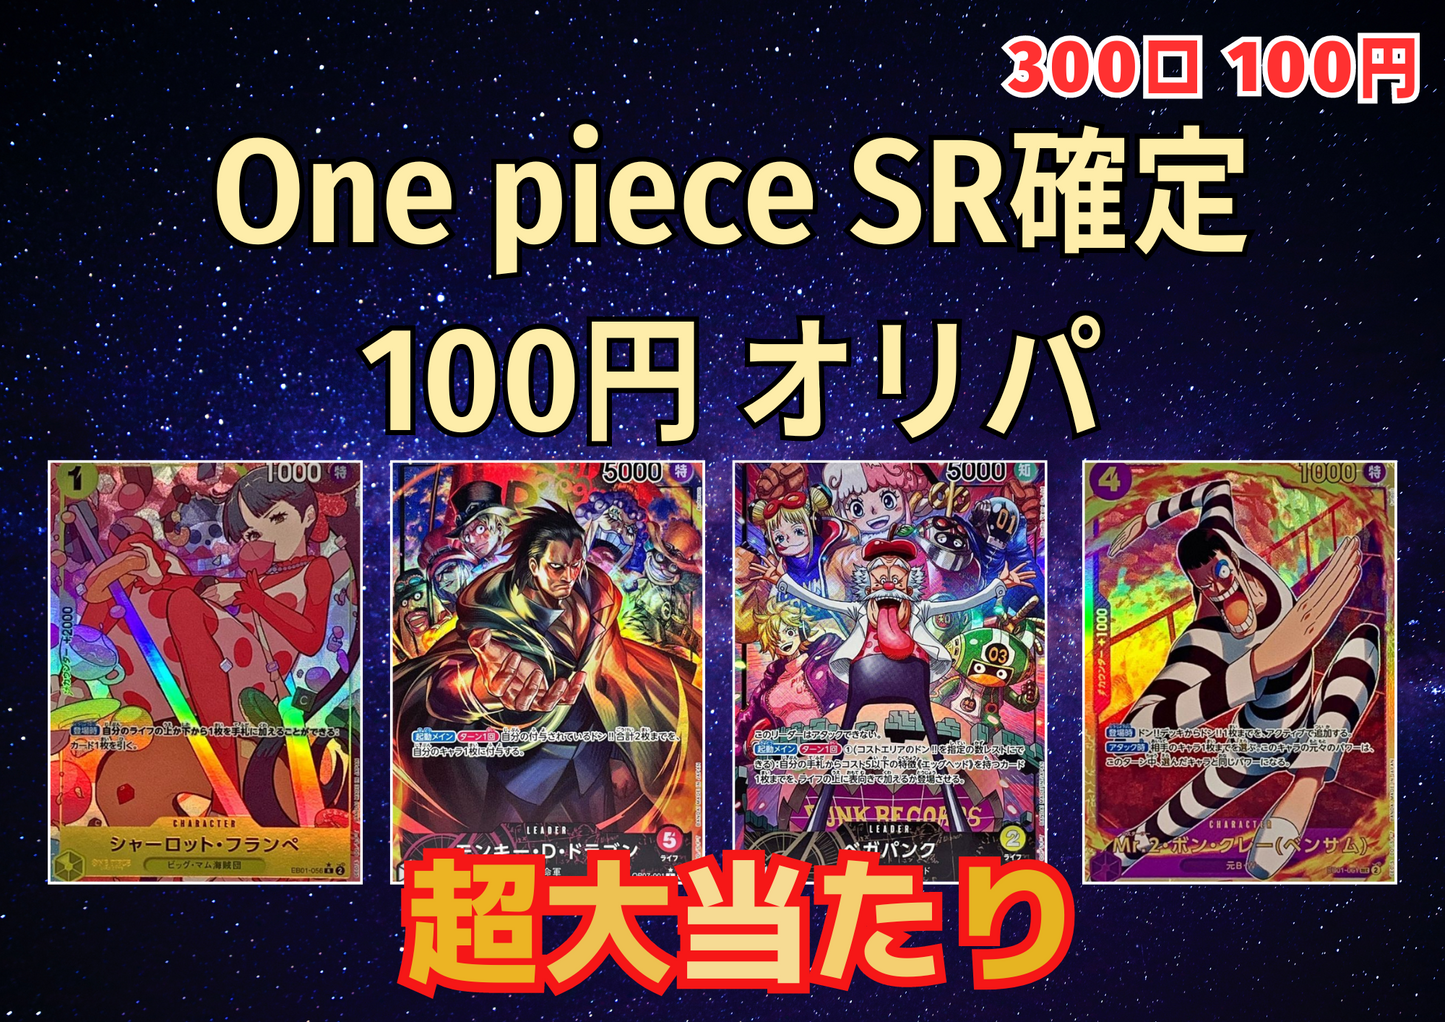 One piece SR確定 100円 オリパ　【ワンピース】【店舗併売】